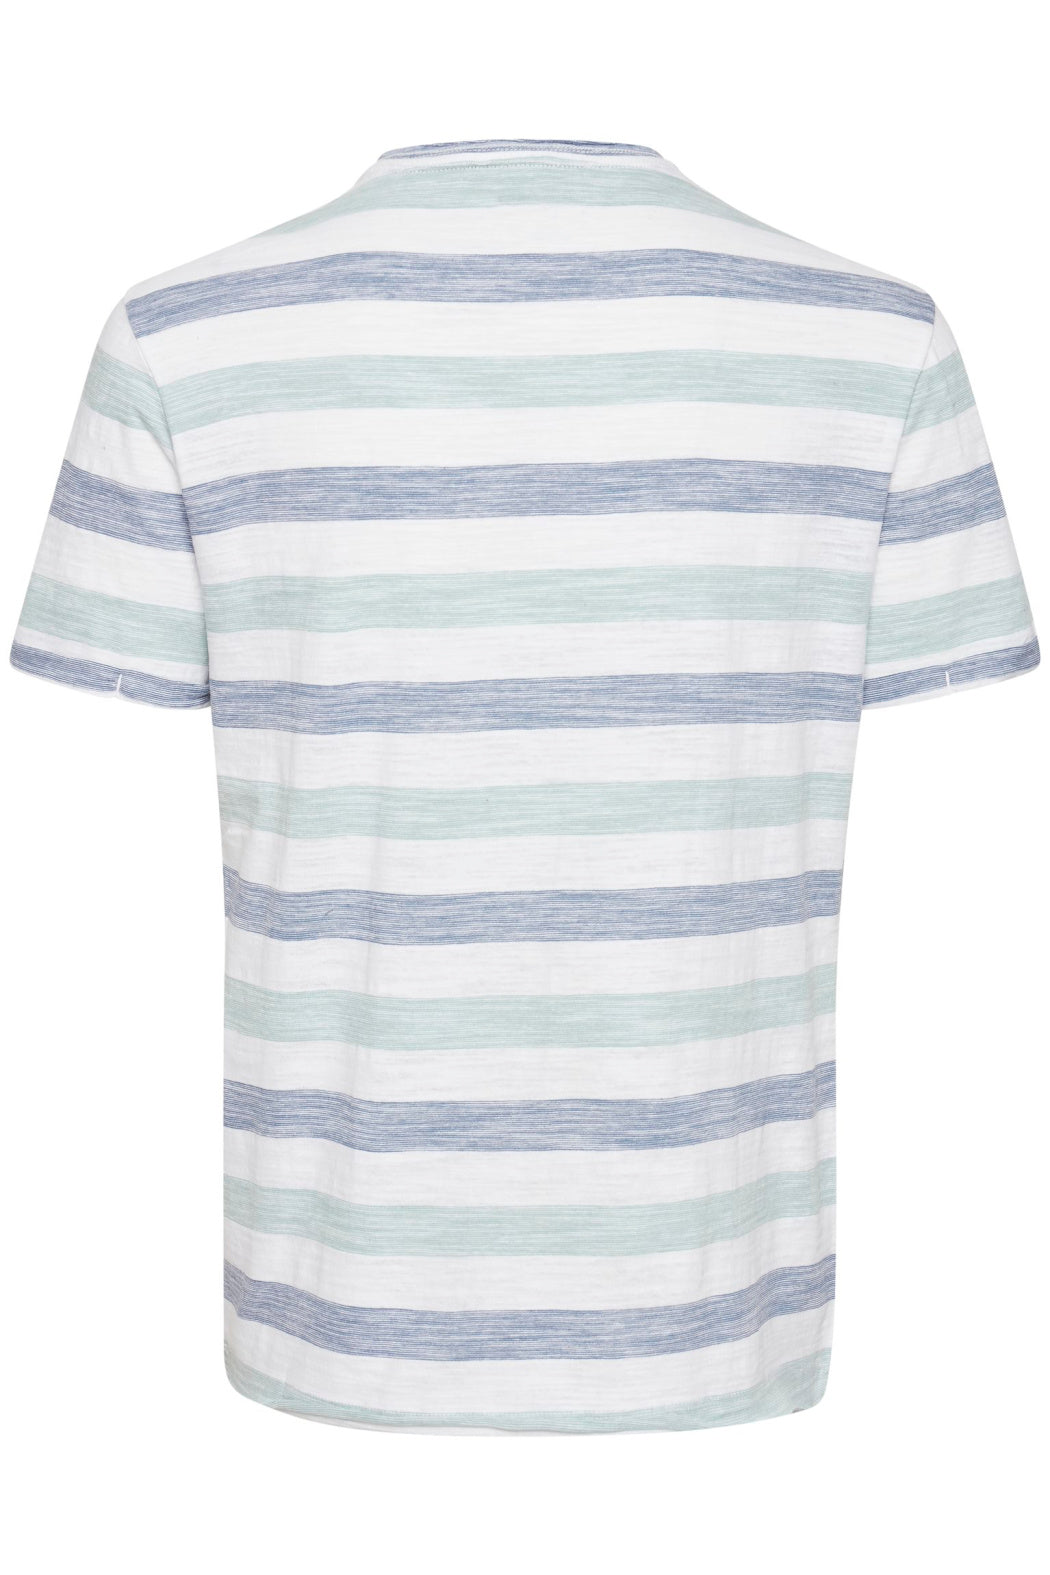 Blend Stripe T-Shirt